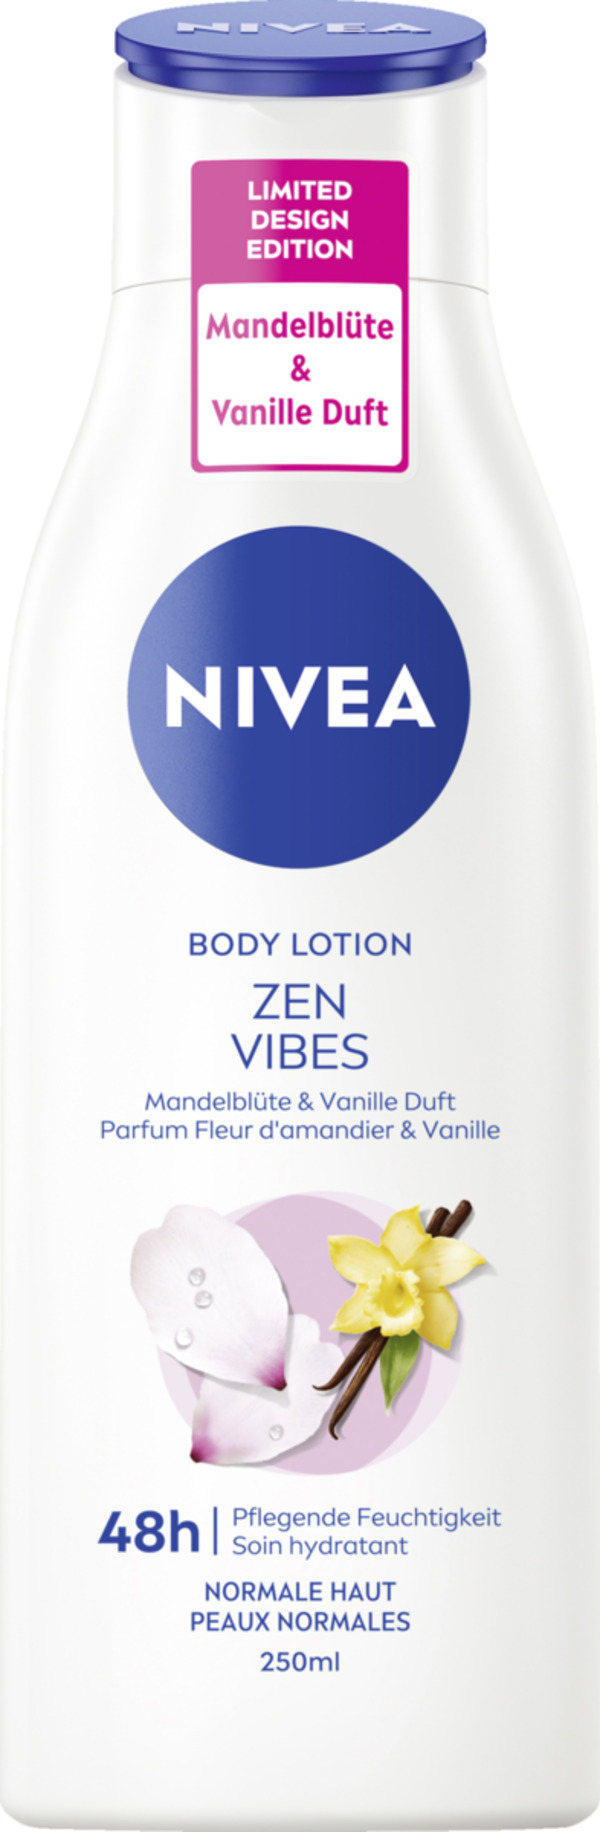 Bild 1 von NIVEA Body Lotion Zen Vibes